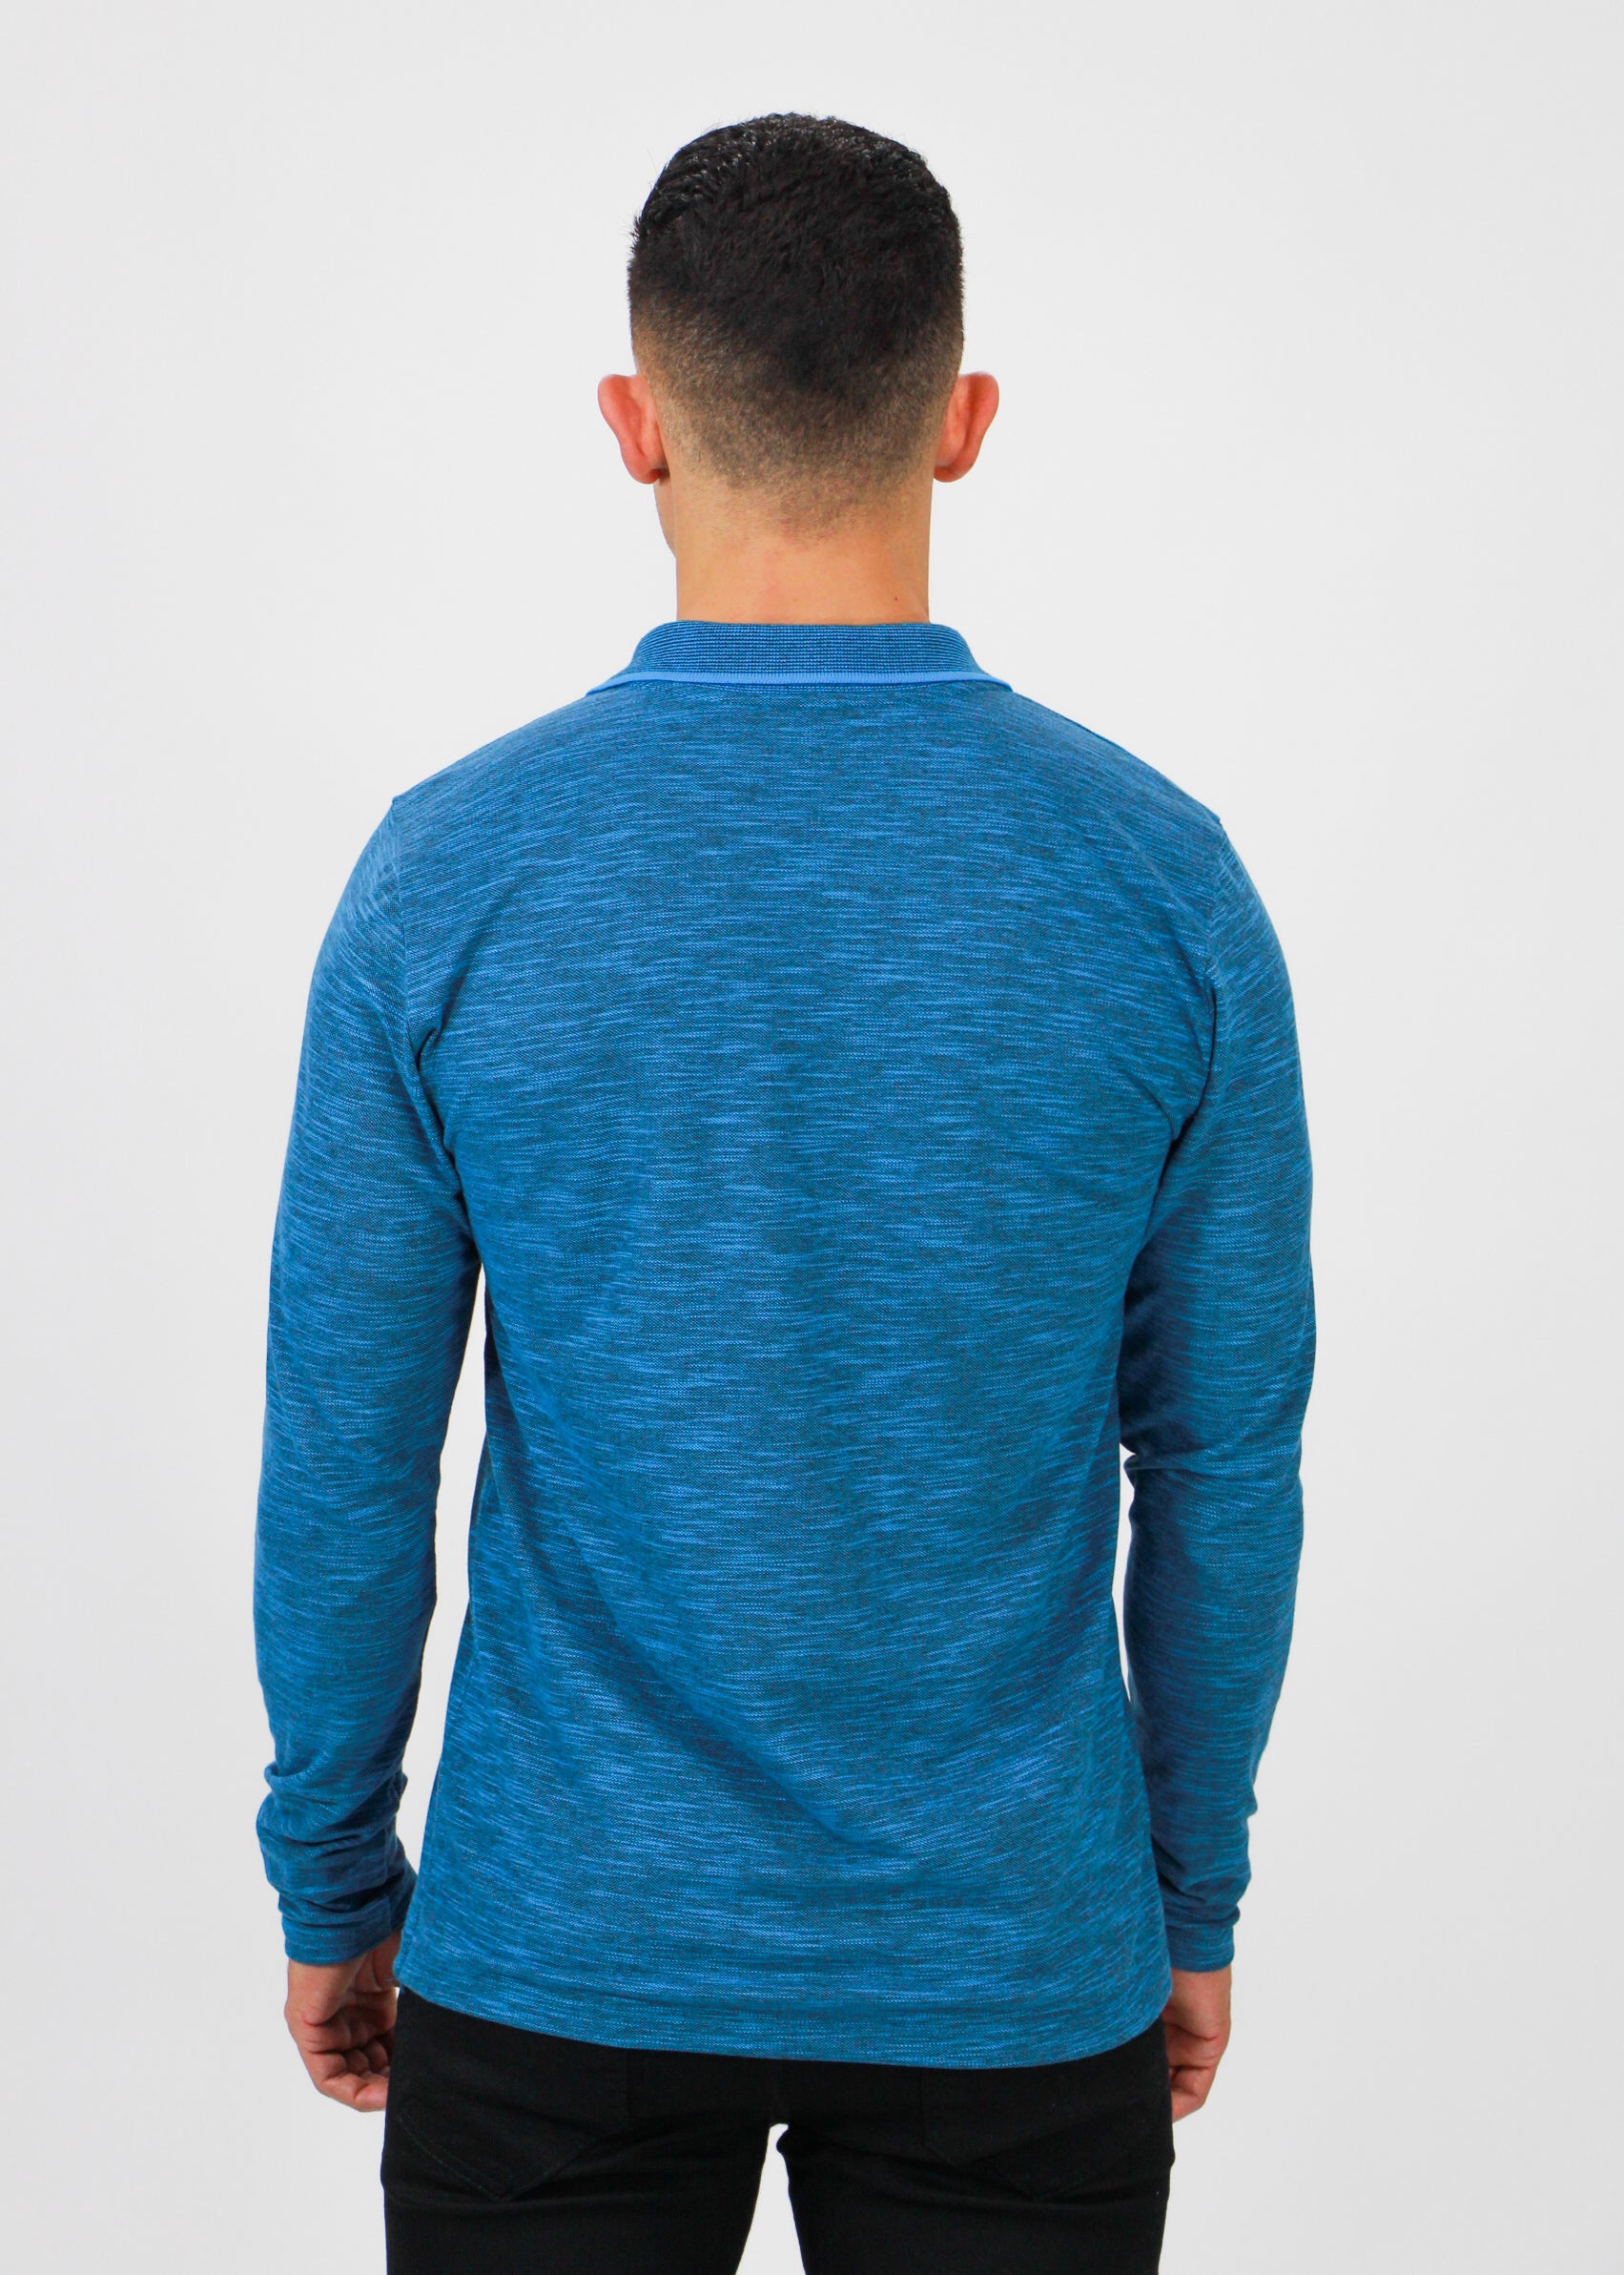 Camisa Polo Manga Longa - Azul